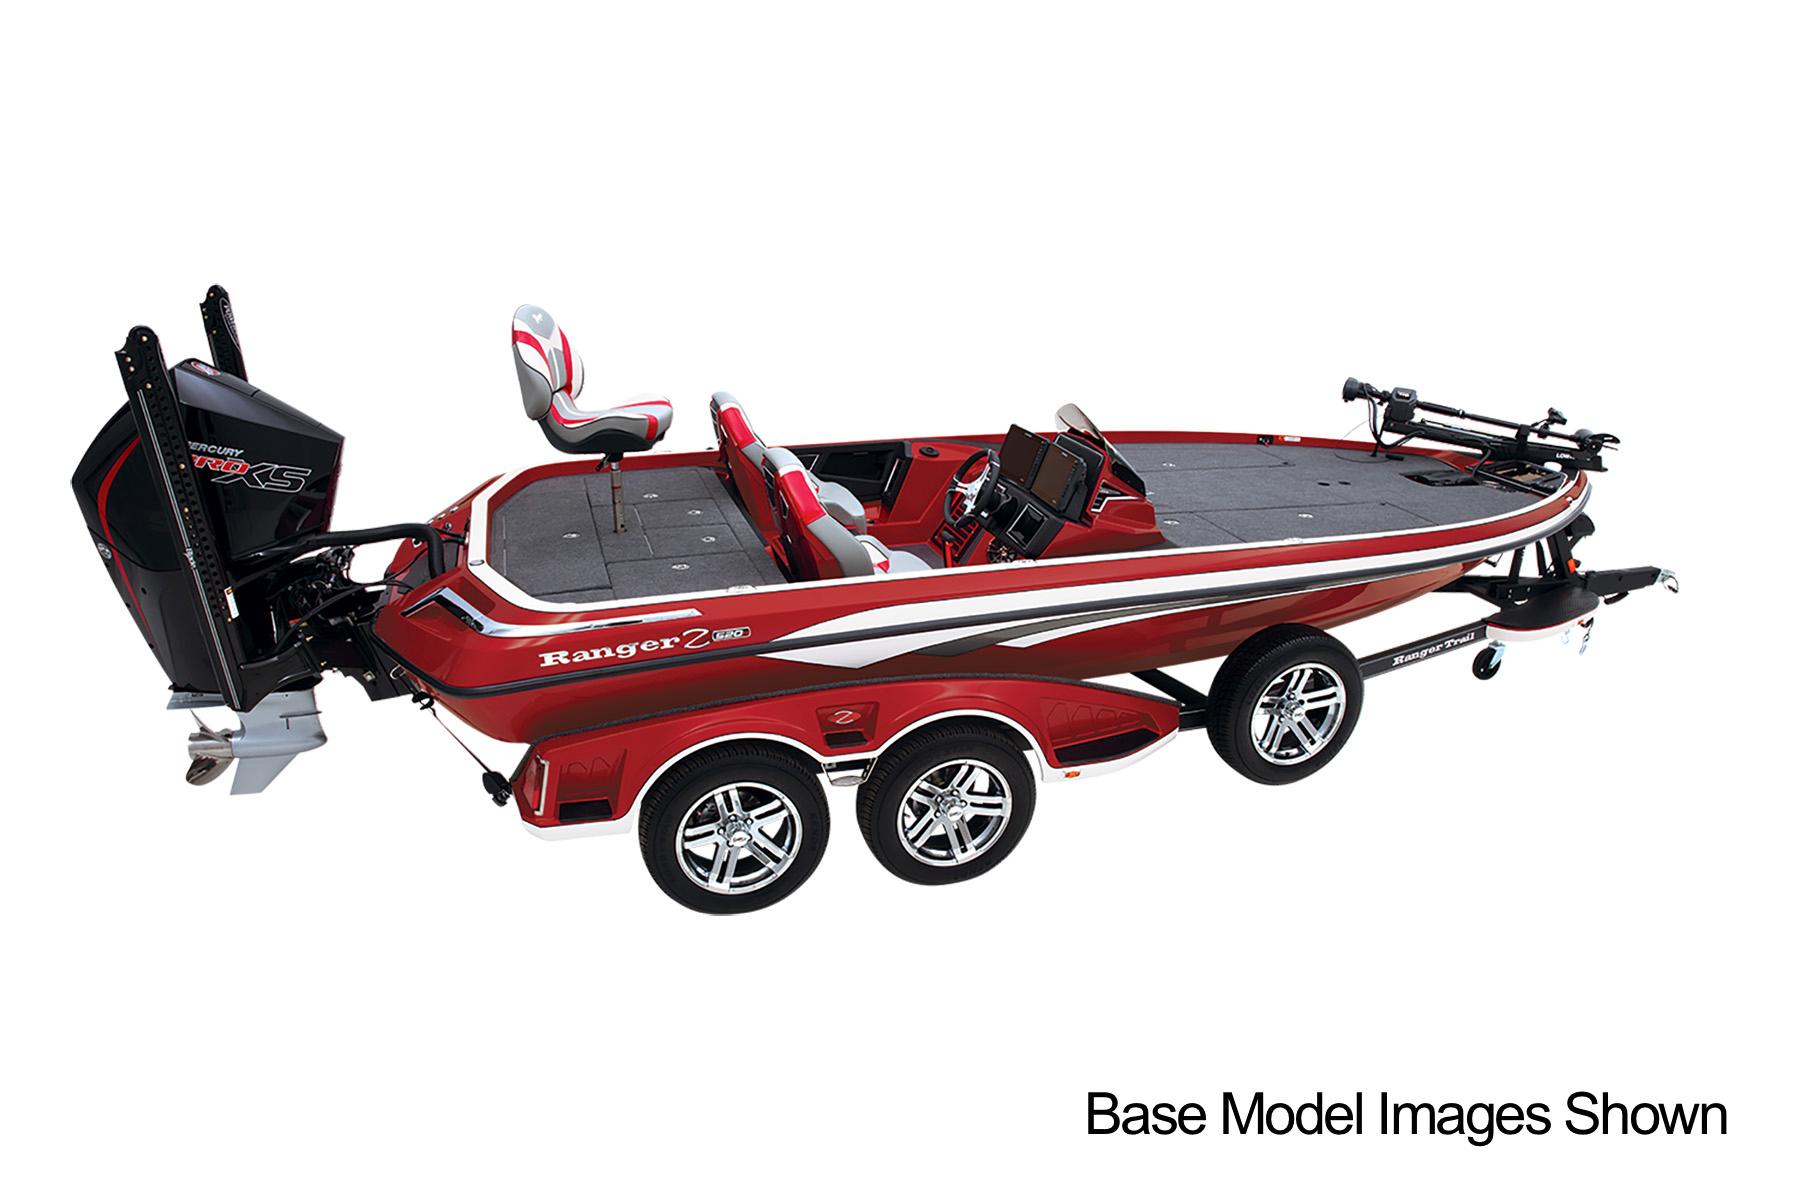 Ranger New Boat Models - Bowers Marine